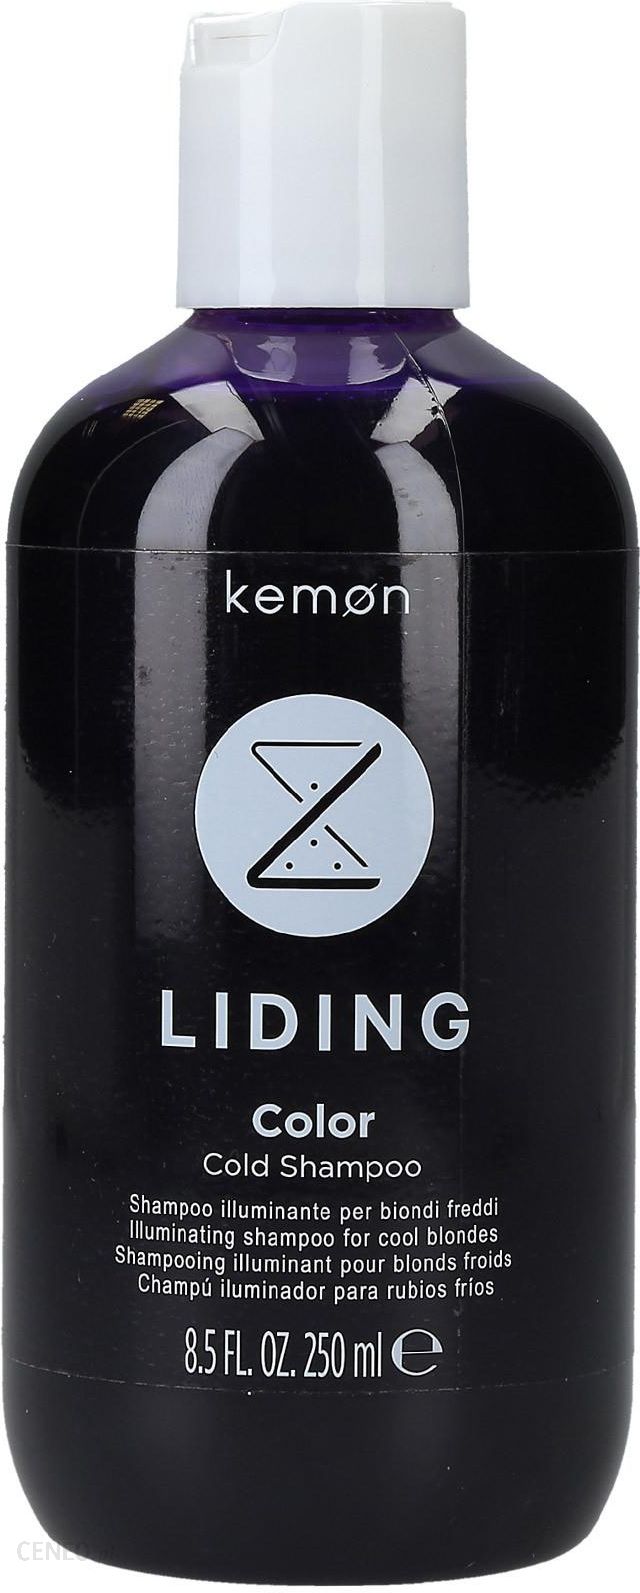 szampon do włosów kemon liding color